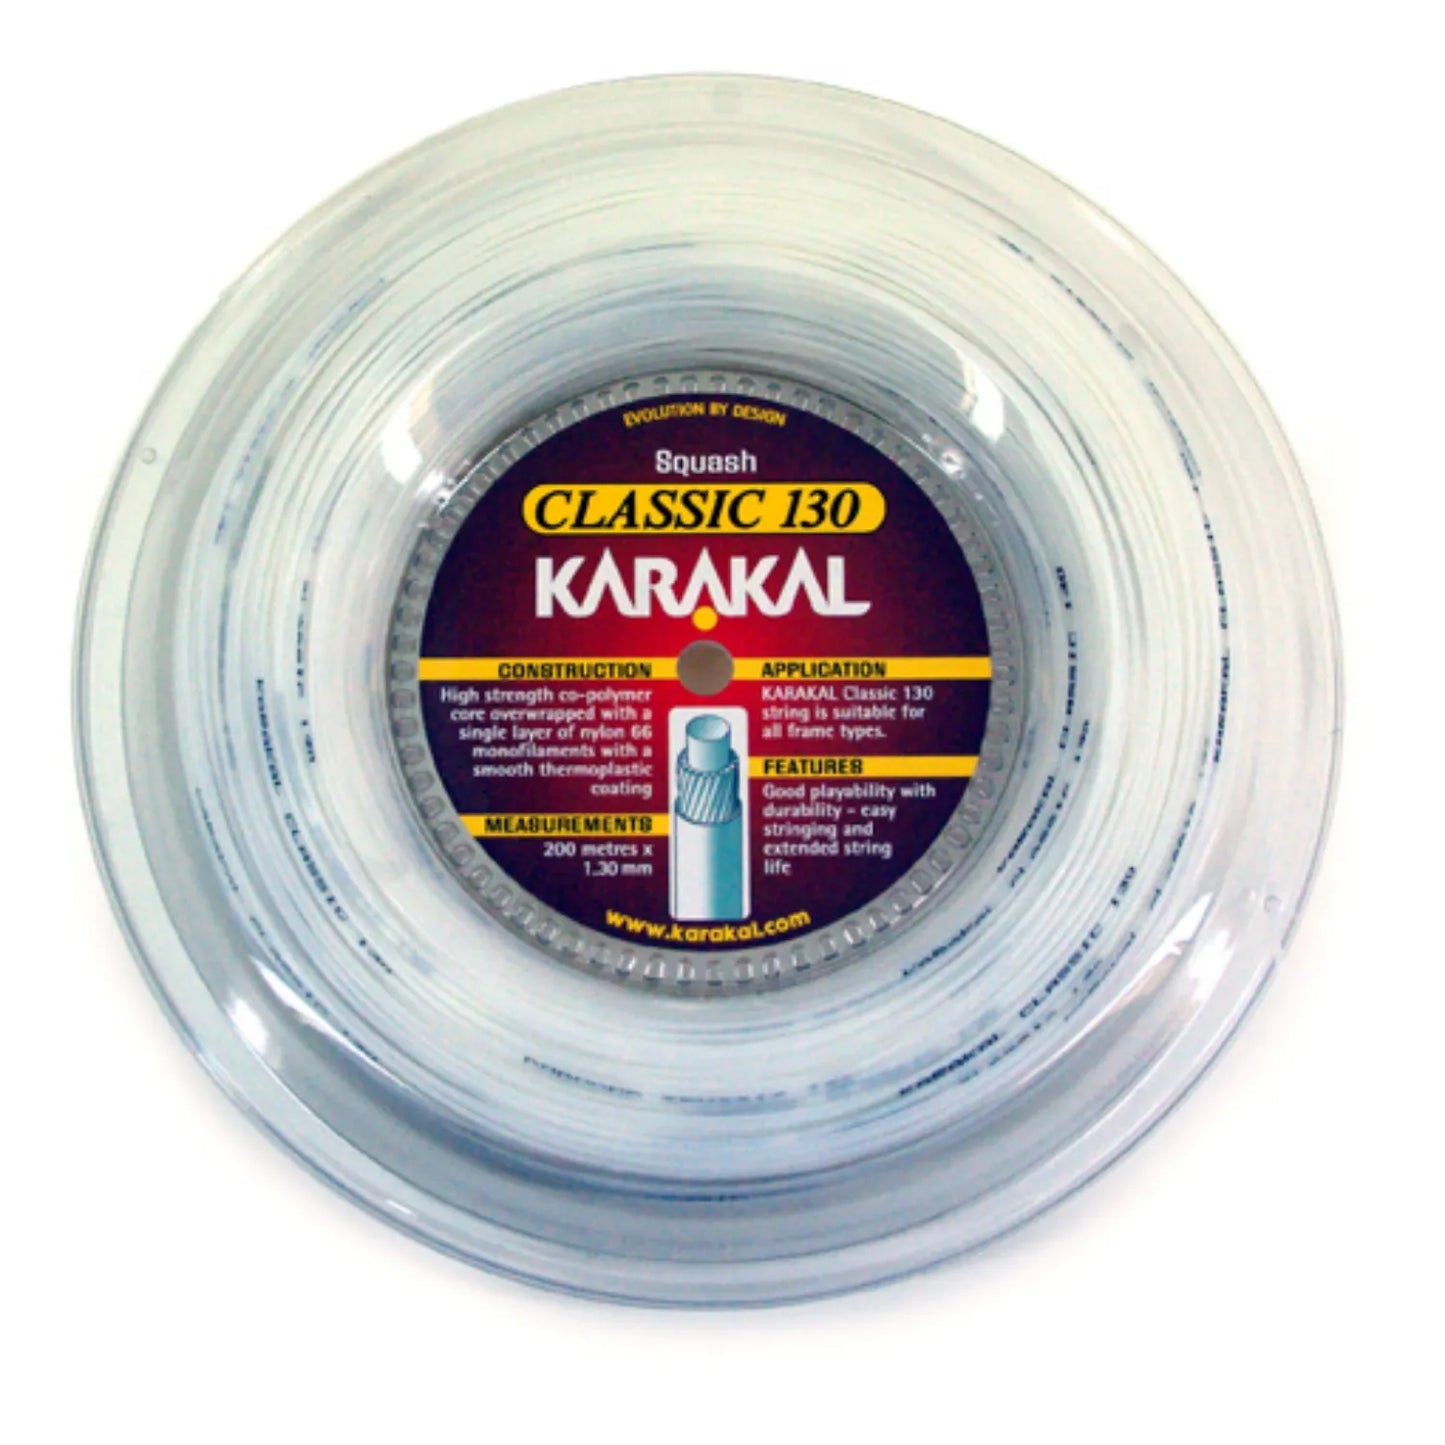 Karakal Classic 130 Squash Strings 200M Coil